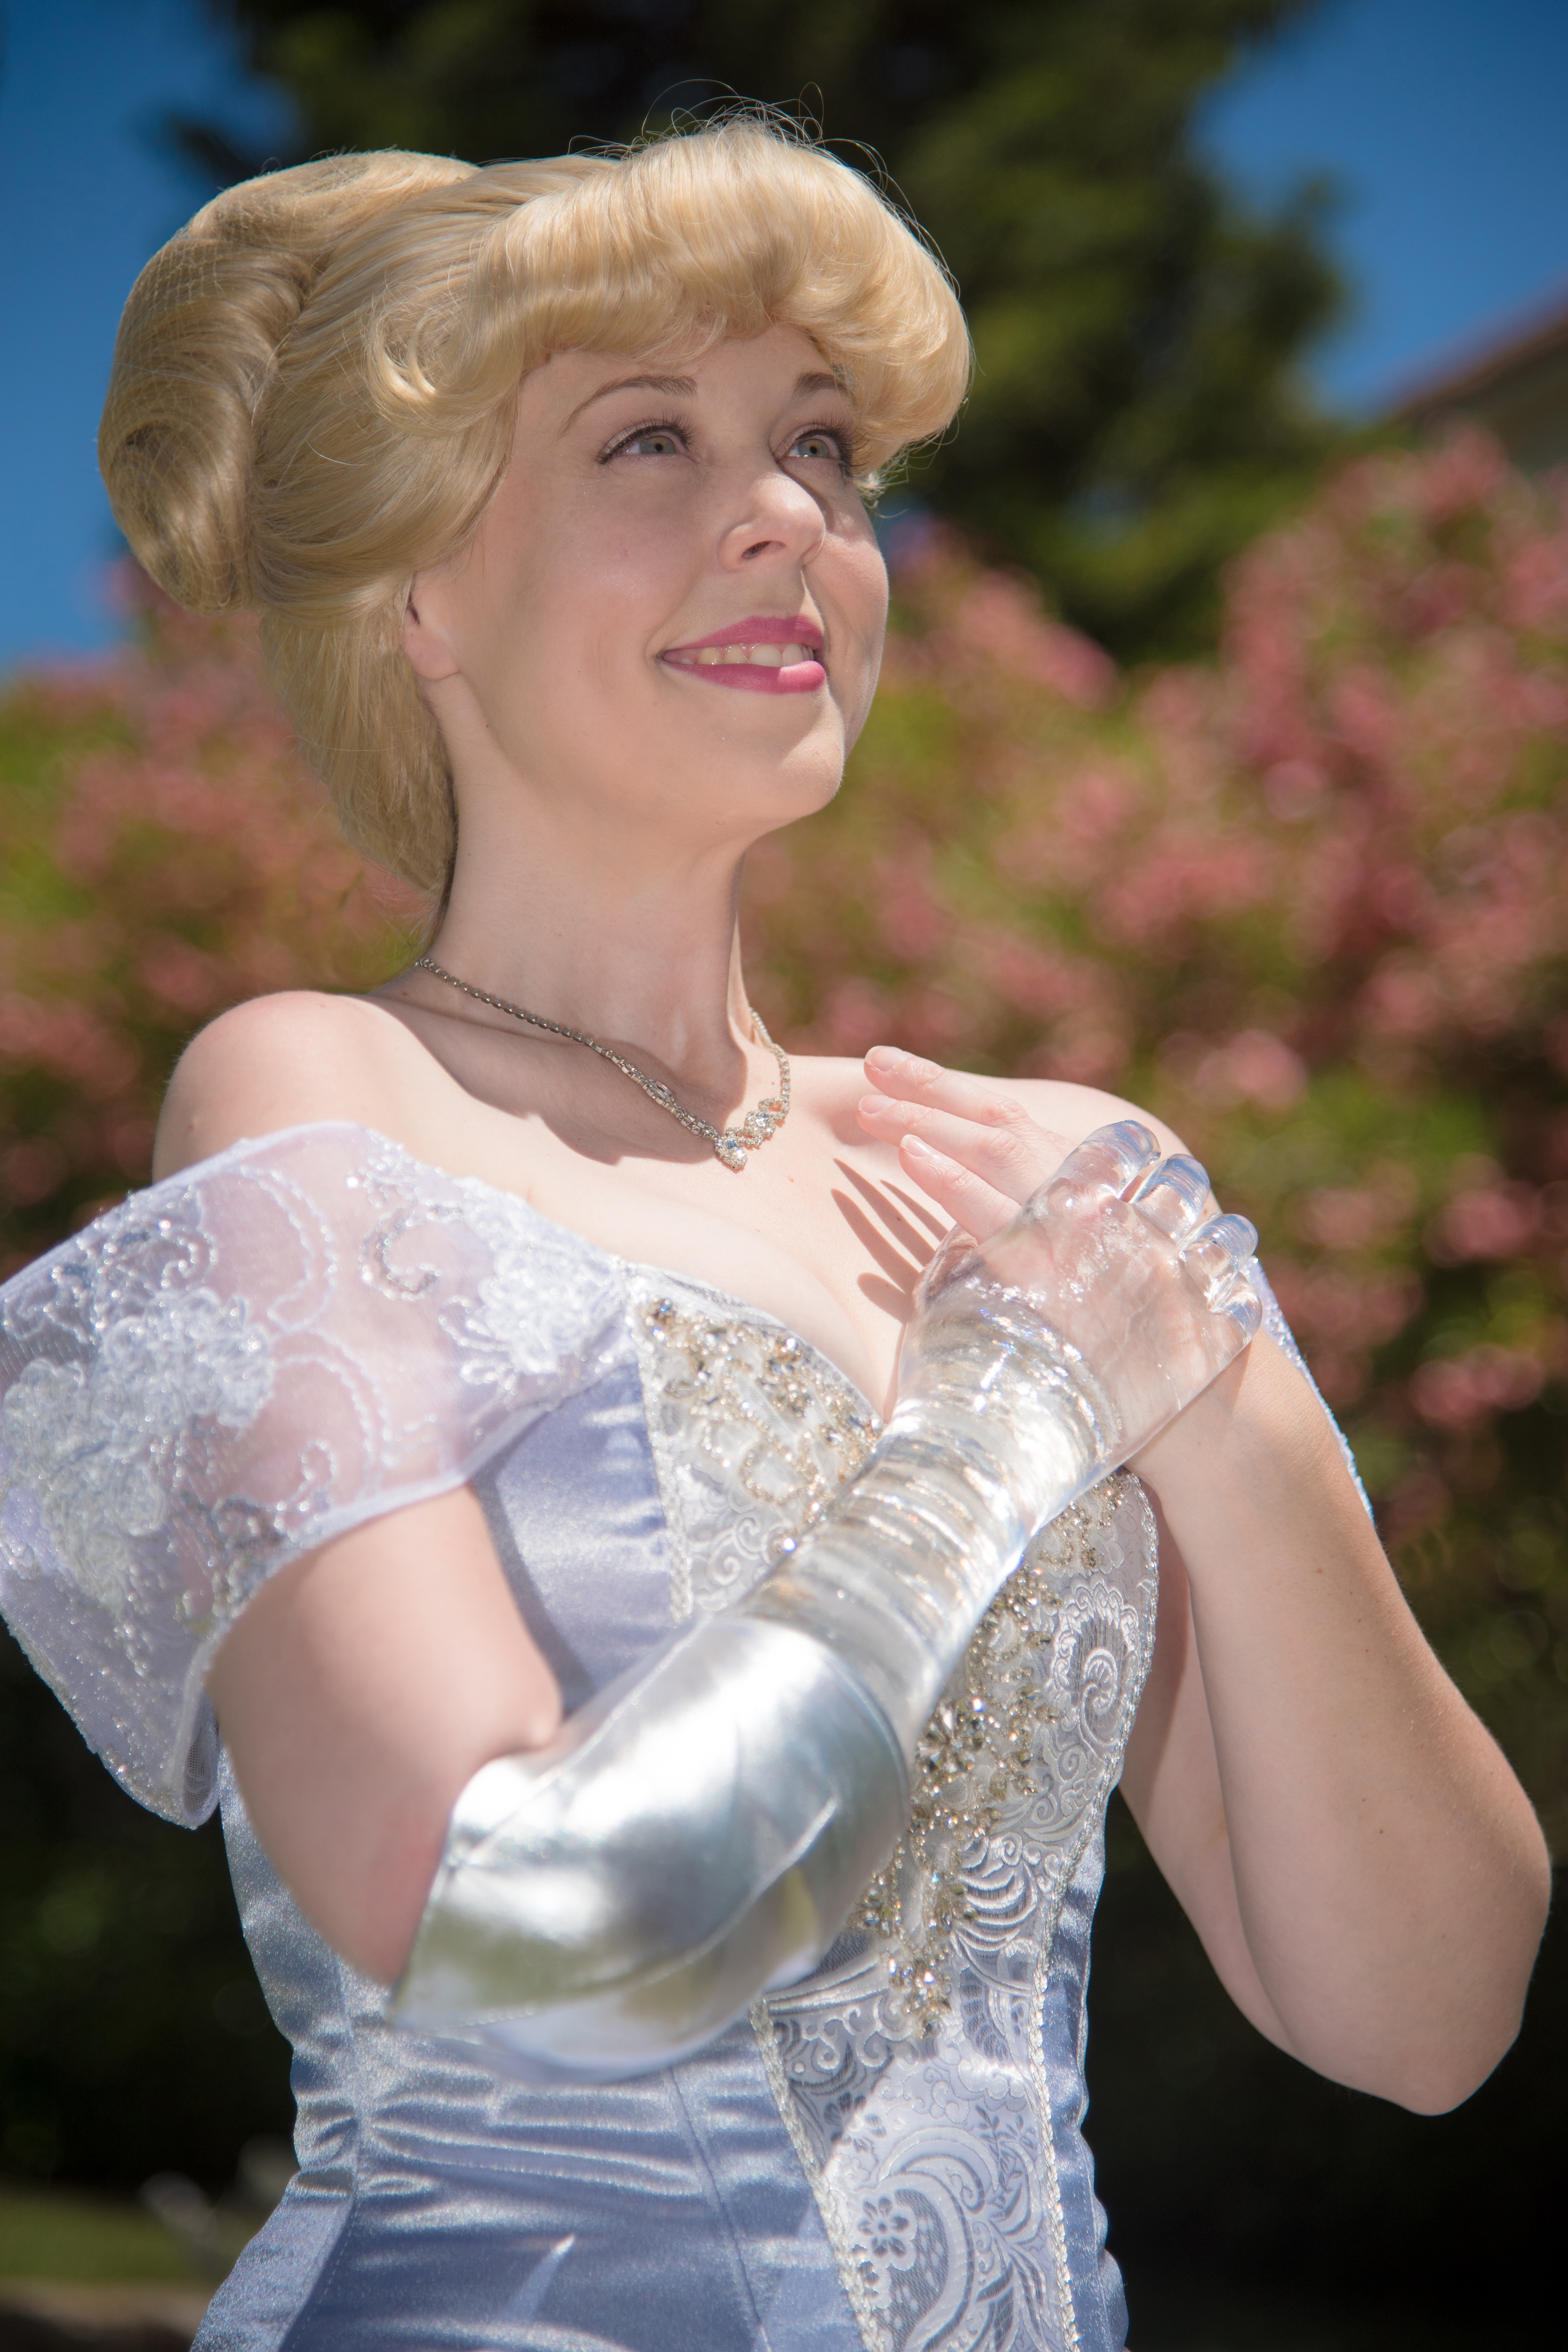 Mandy Pursley as Cinderella with a glass arm